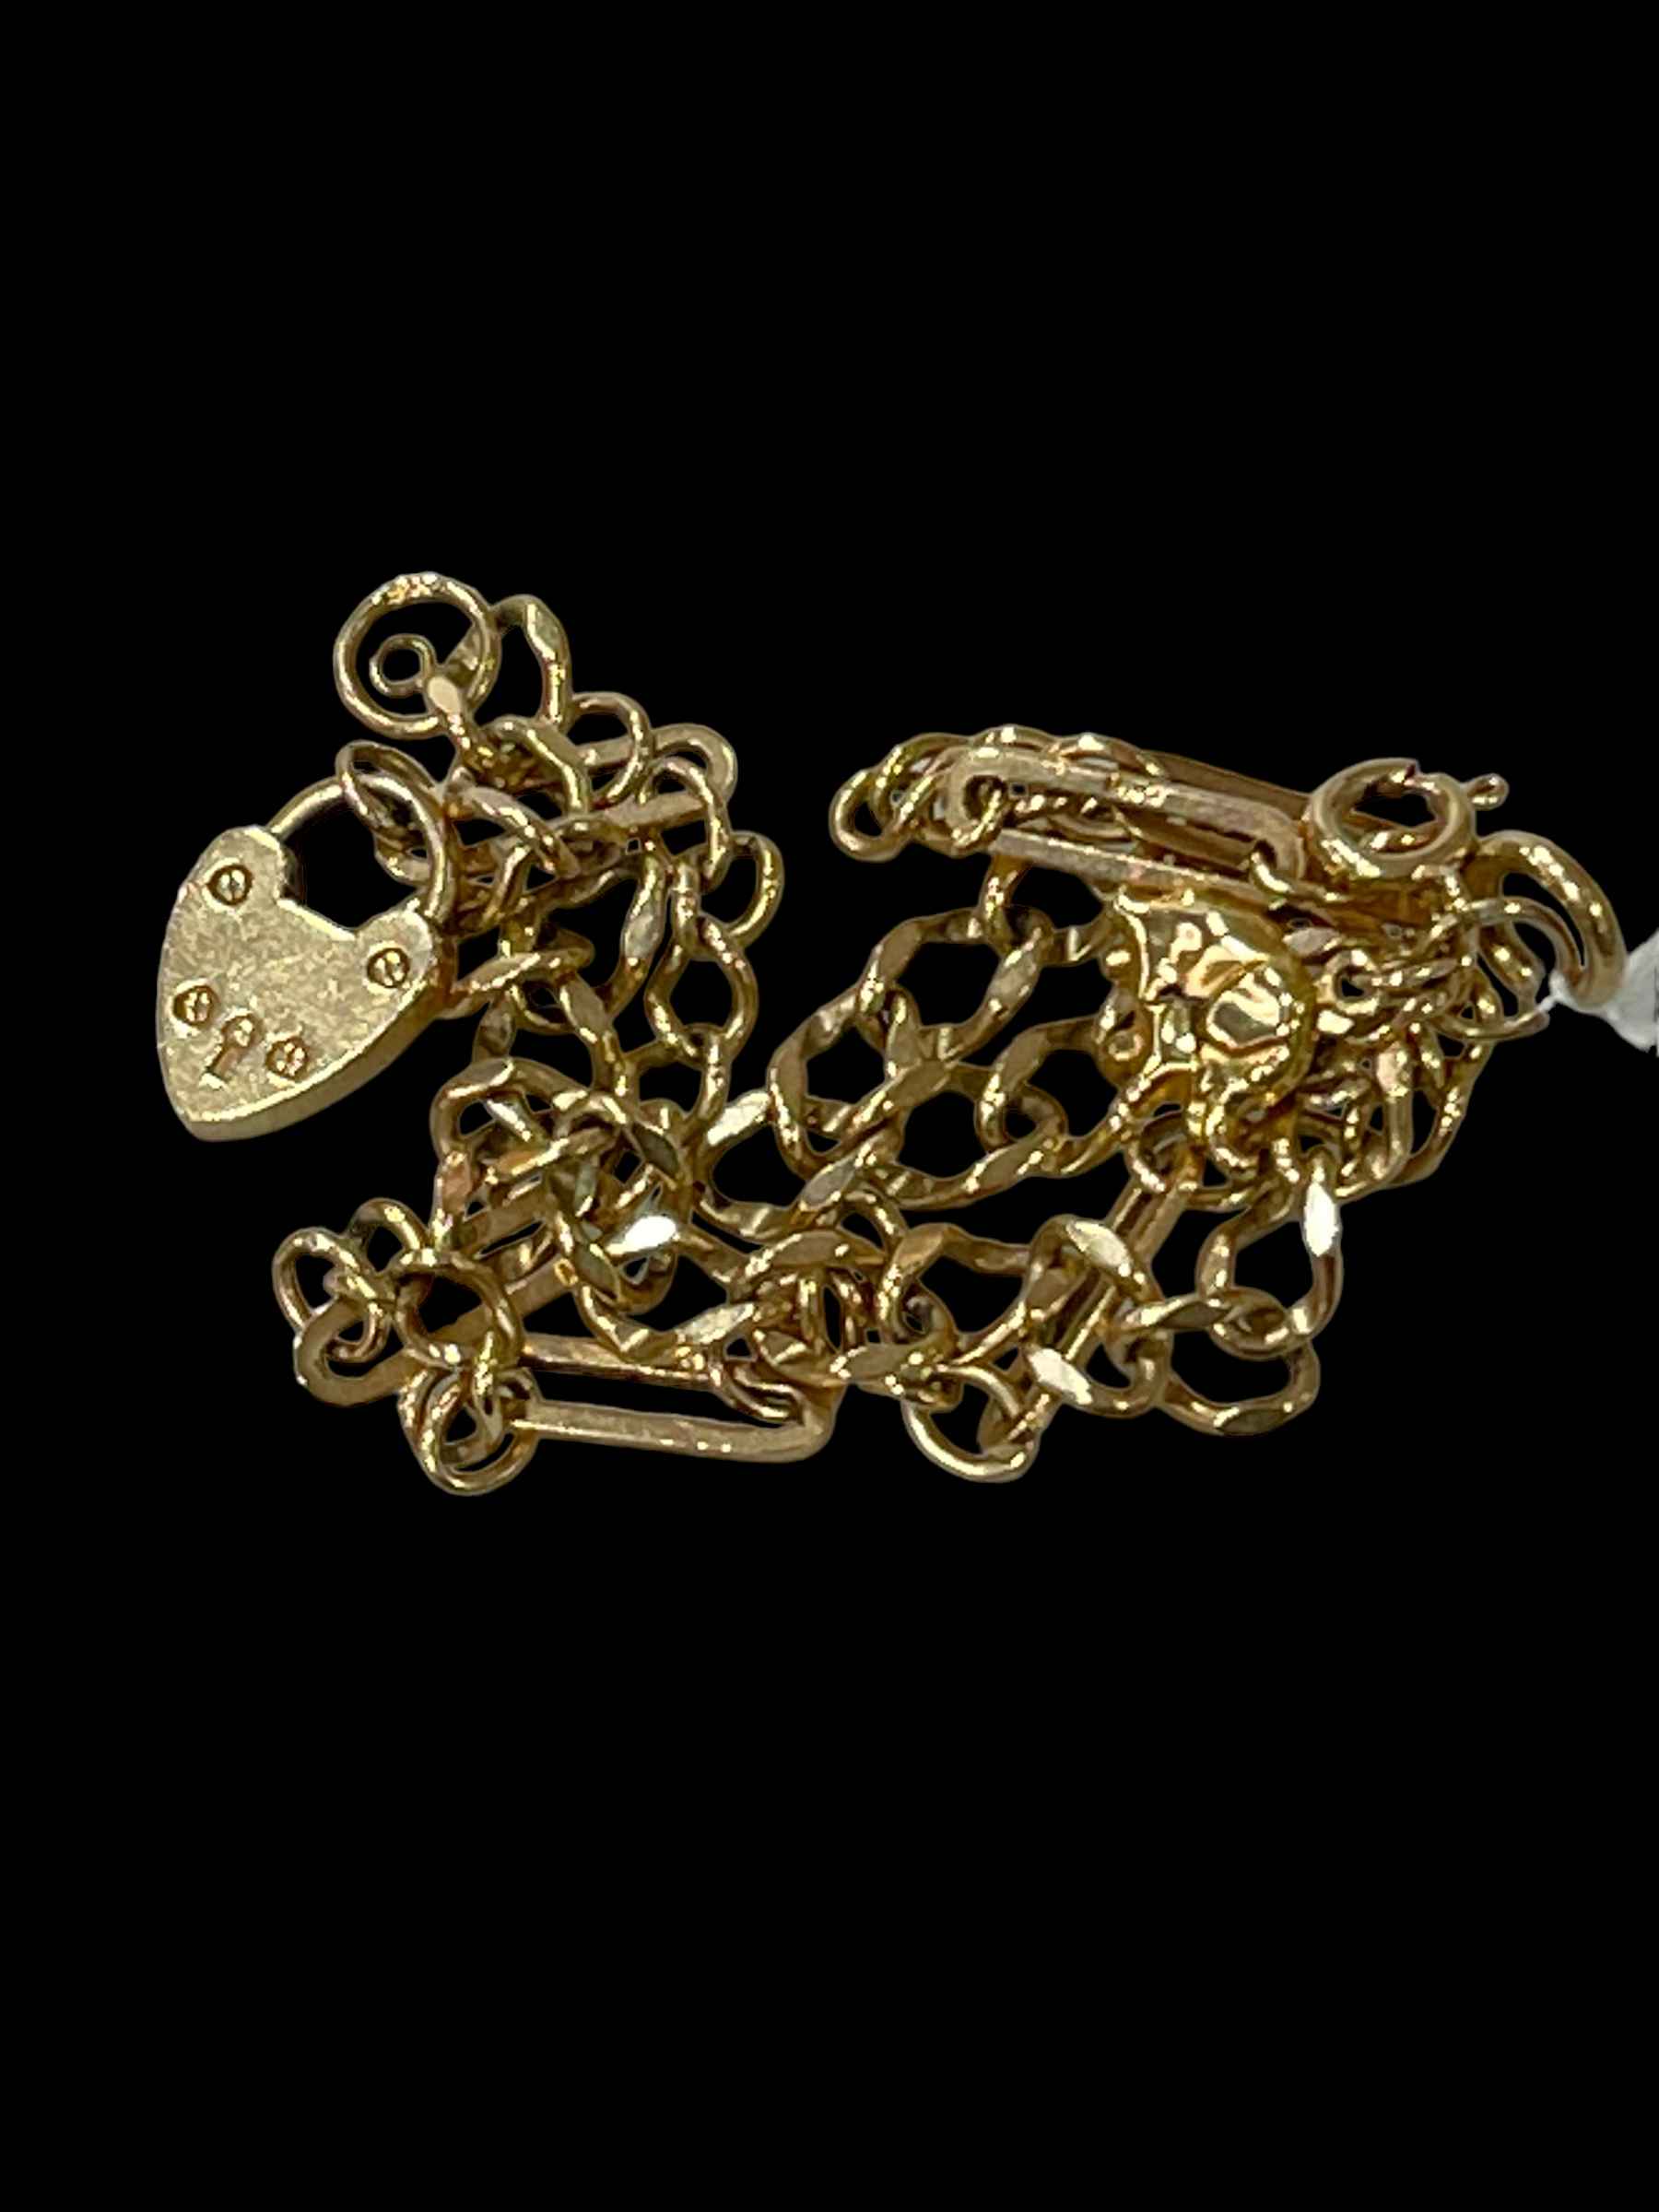 Two 9 carat gold chain link bracelets.